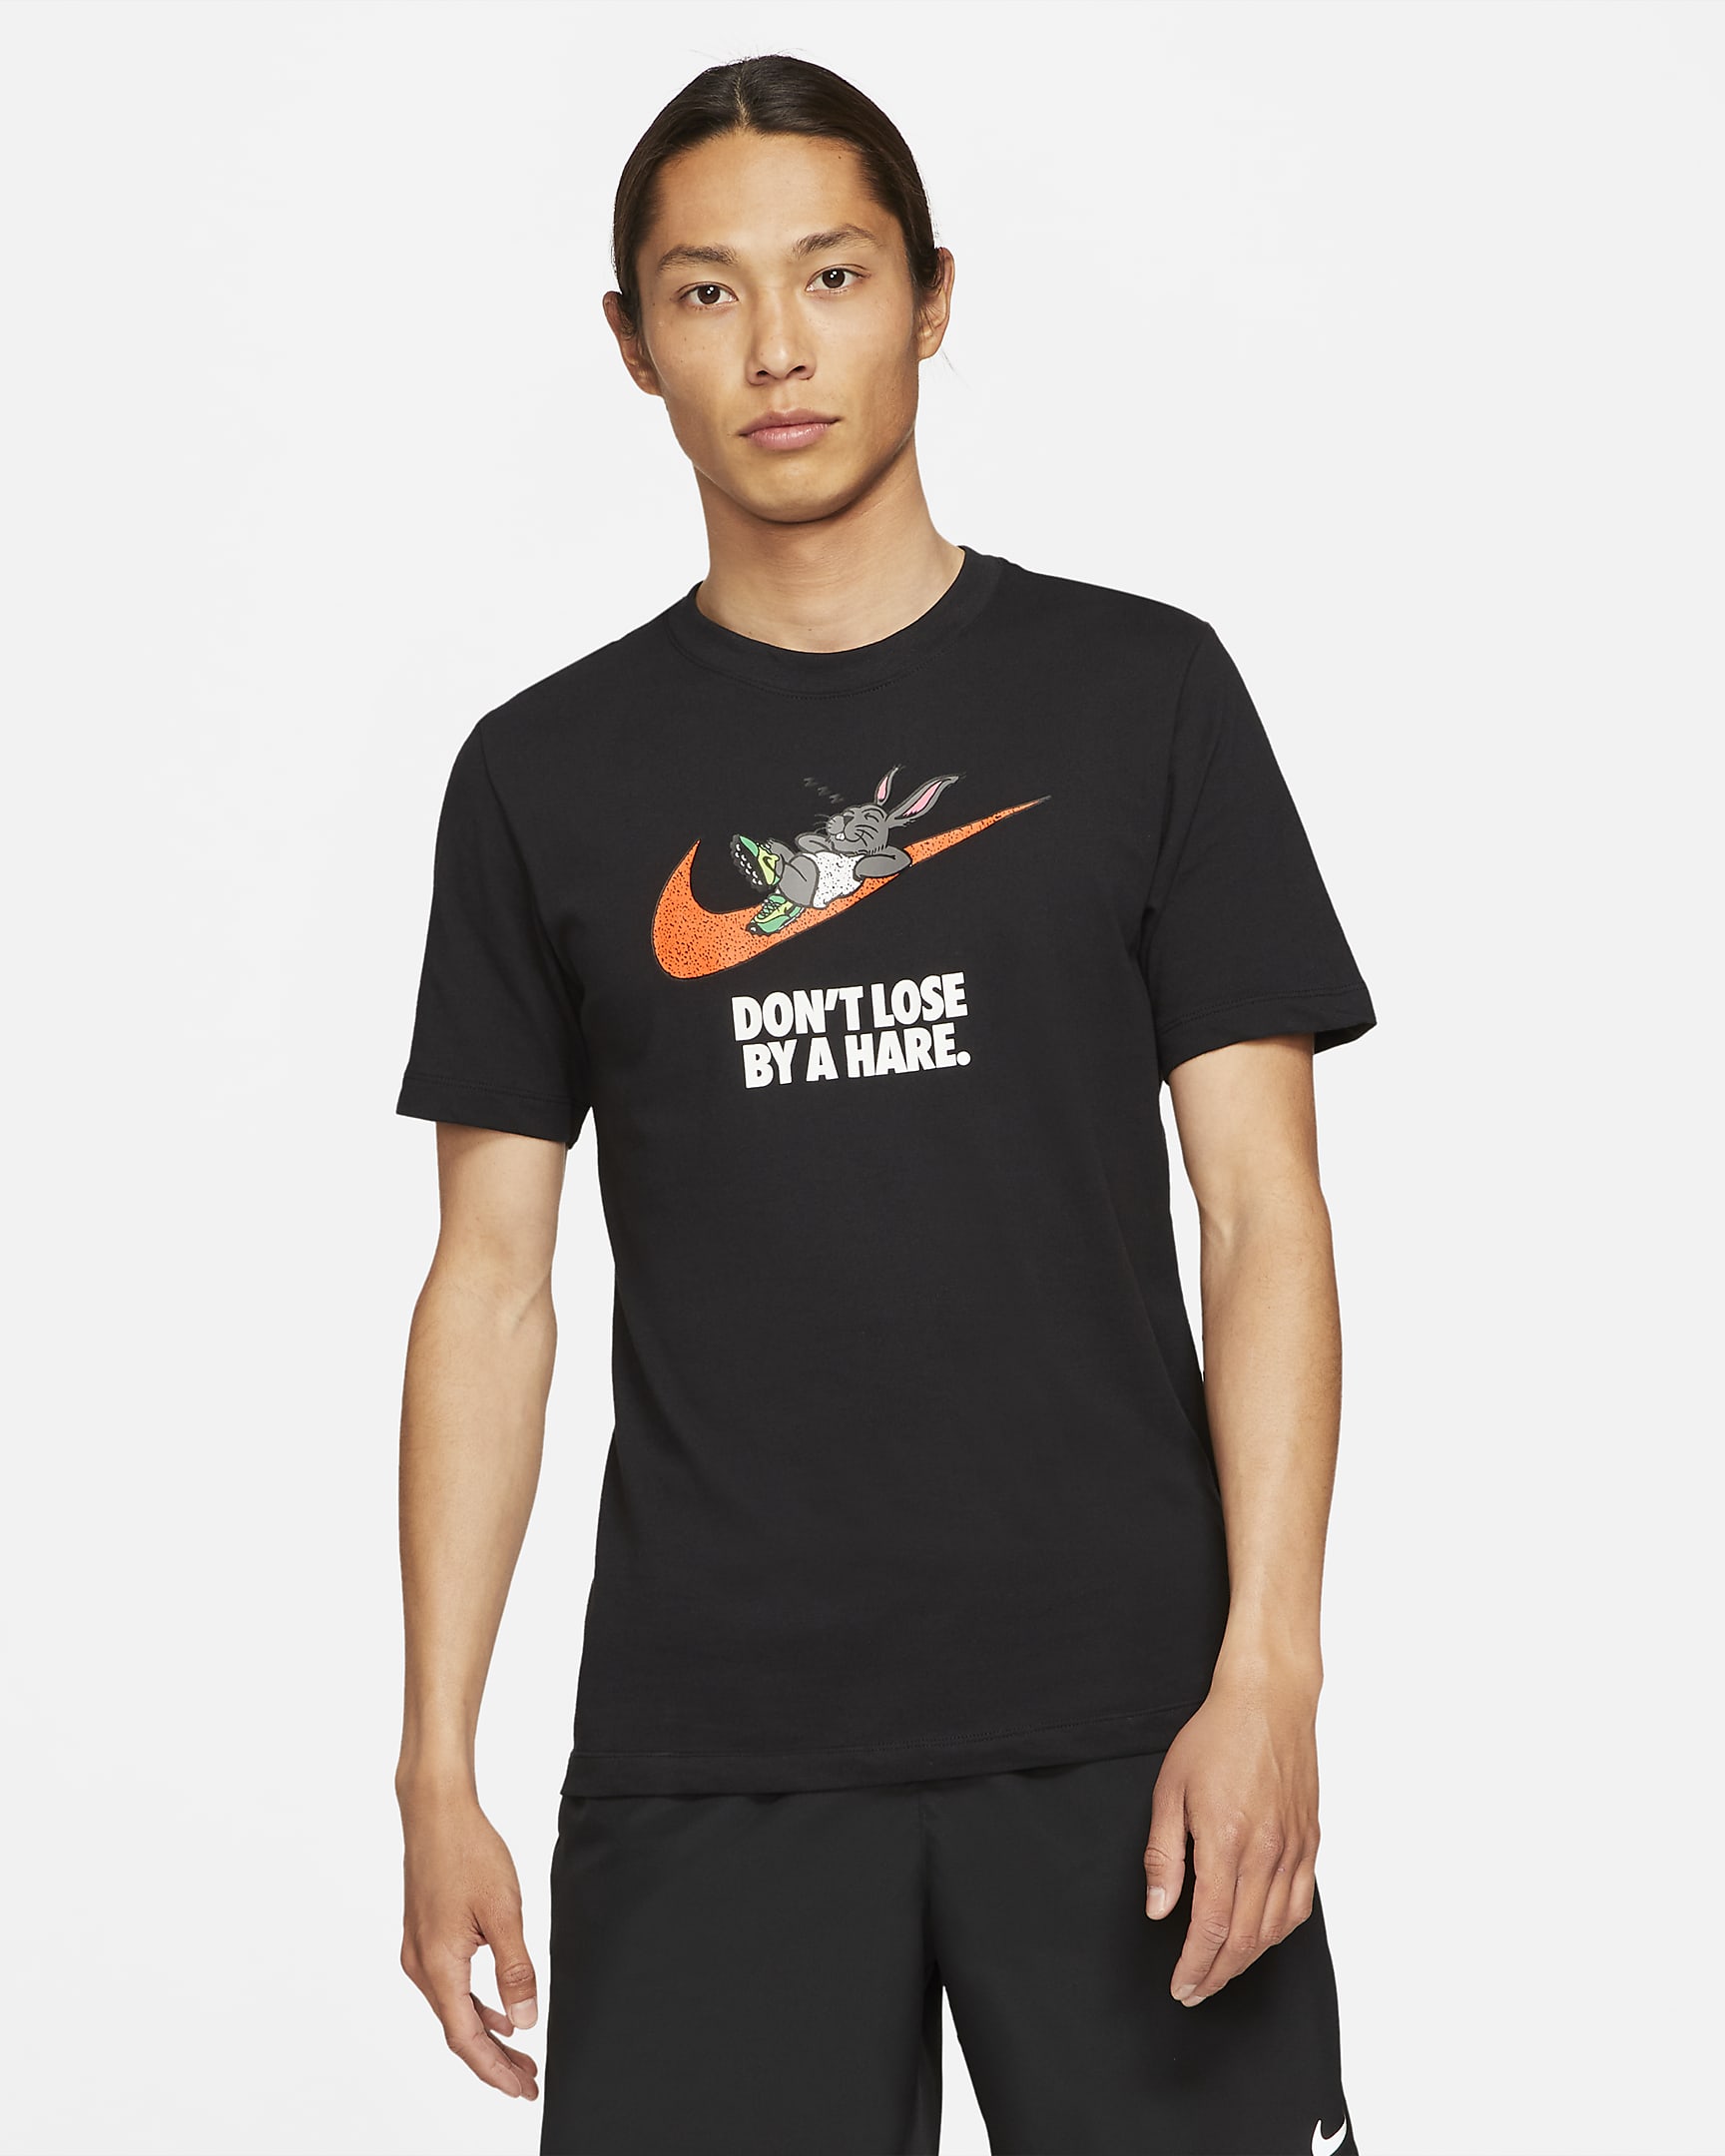 Nike Dri-FIT 'Hare' Men's Running T-Shirt. Nike SG